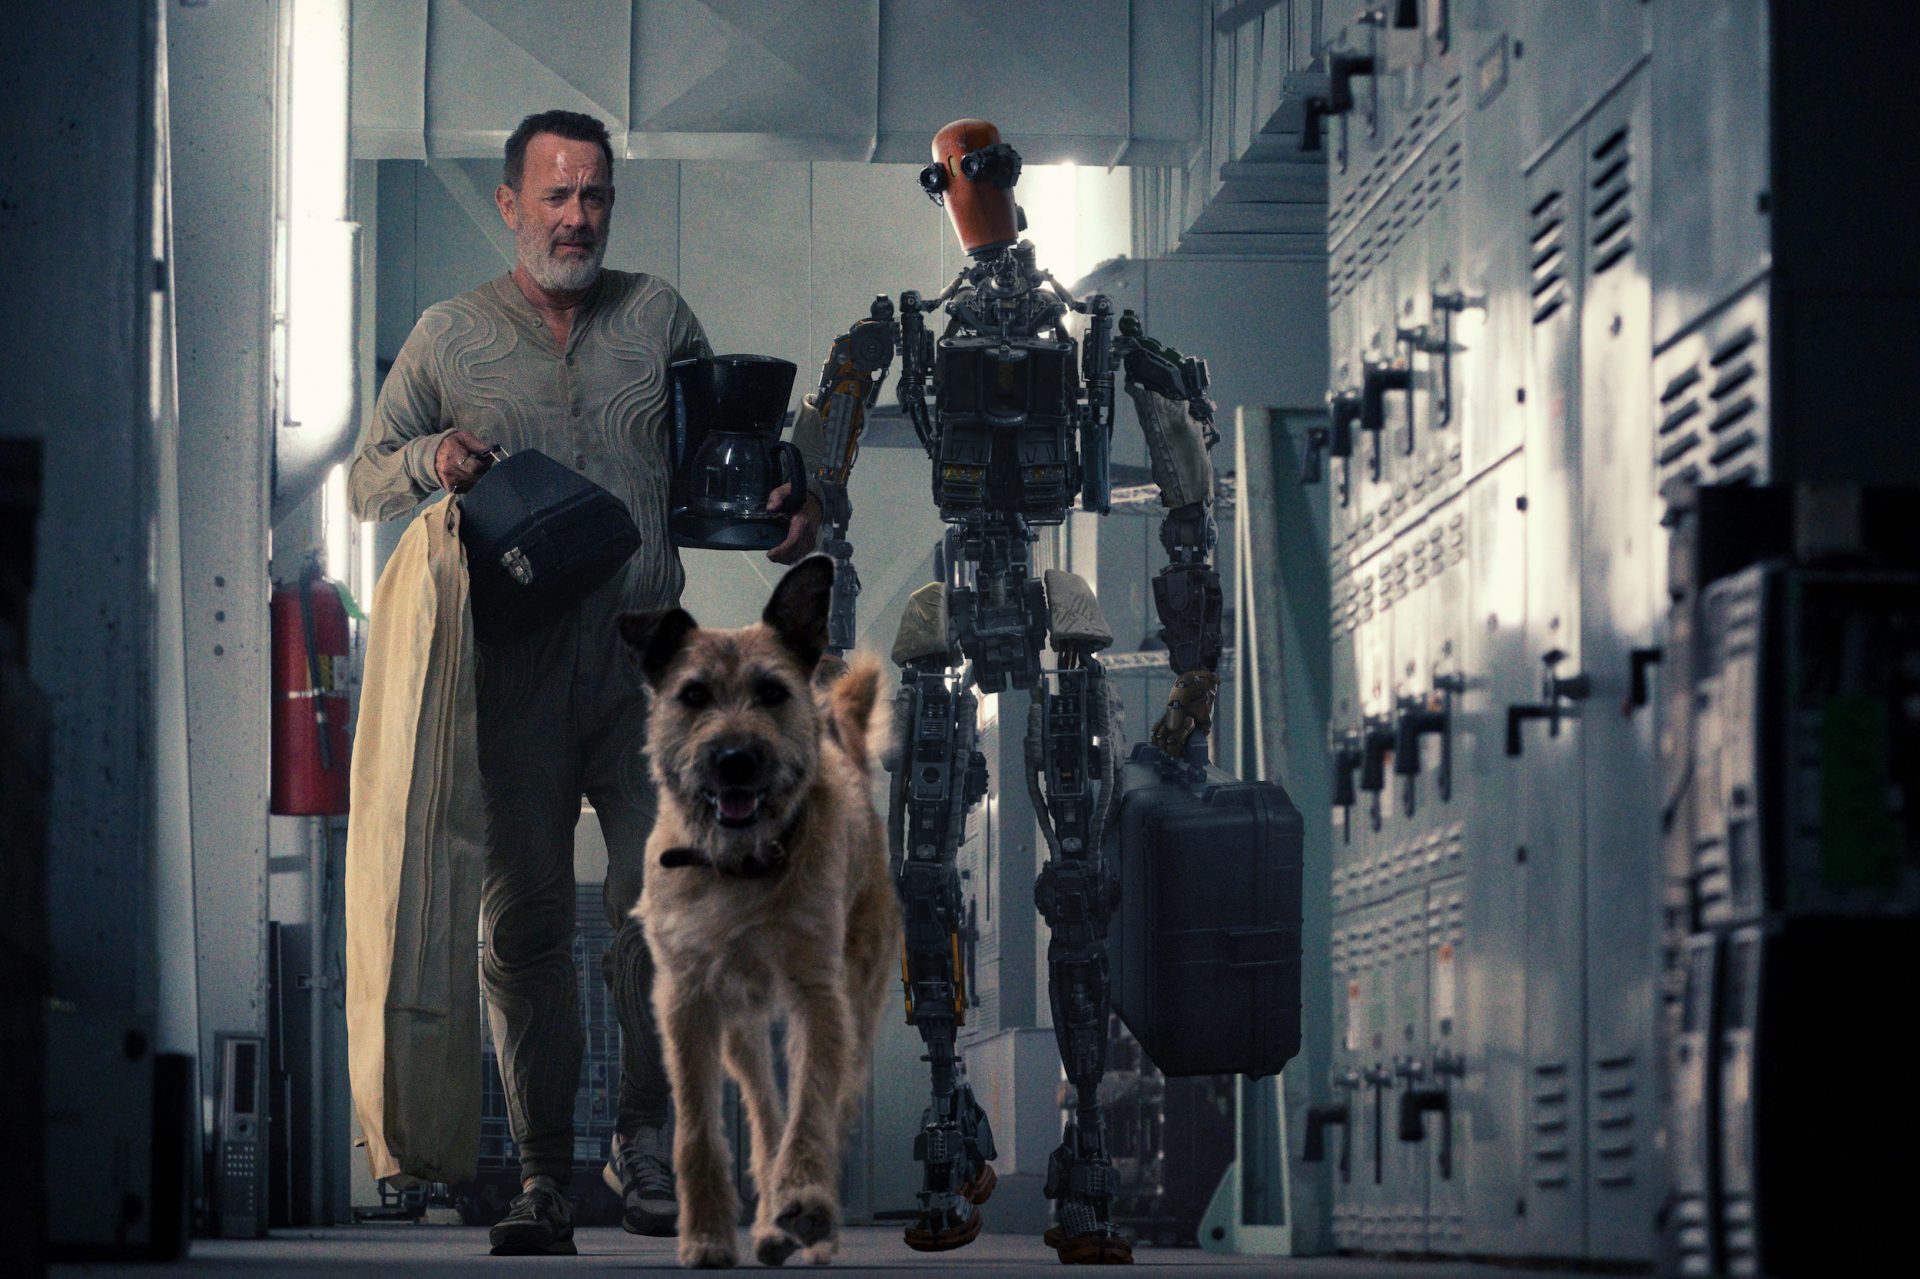 Apple’s Tom Hanks sci-fi movie ‘Finch’ arrives November 5th